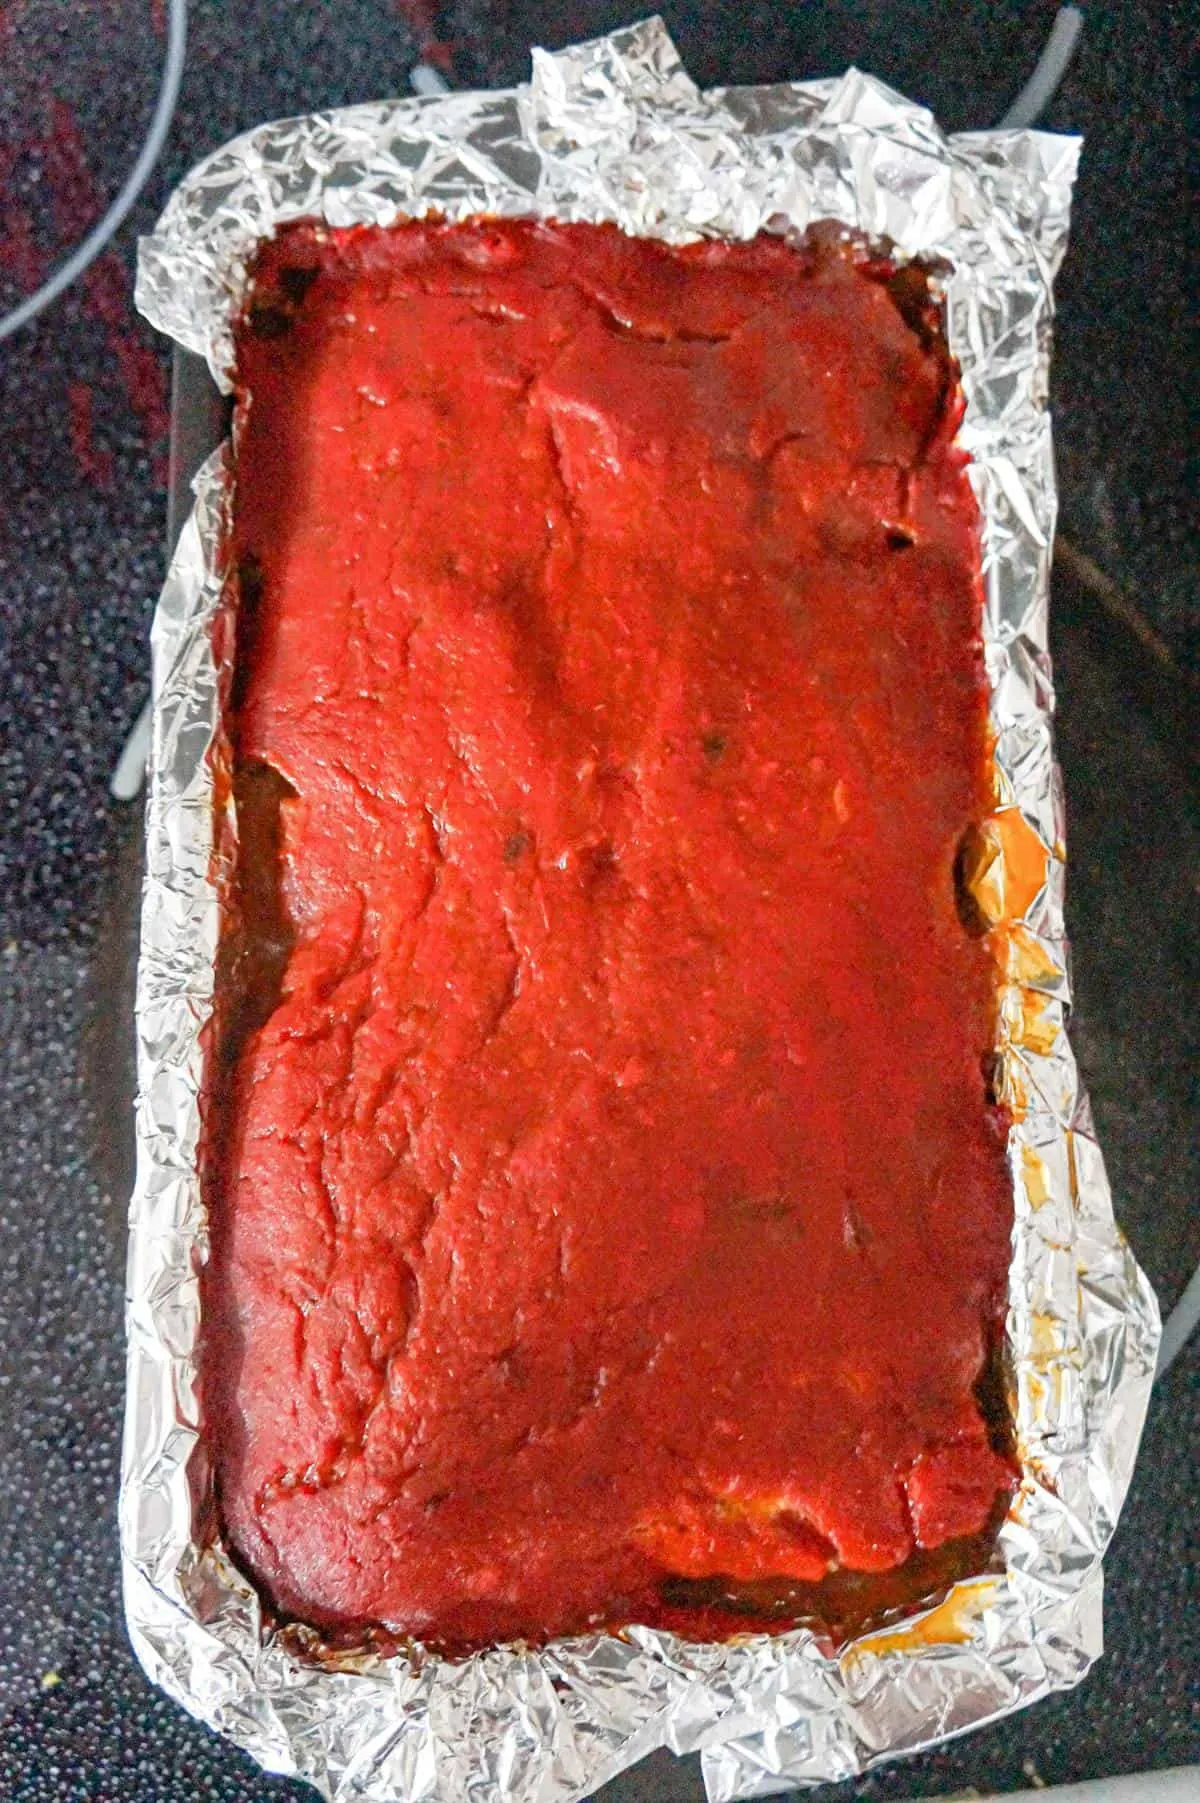 marinara sauce on top of meatloaf after baking